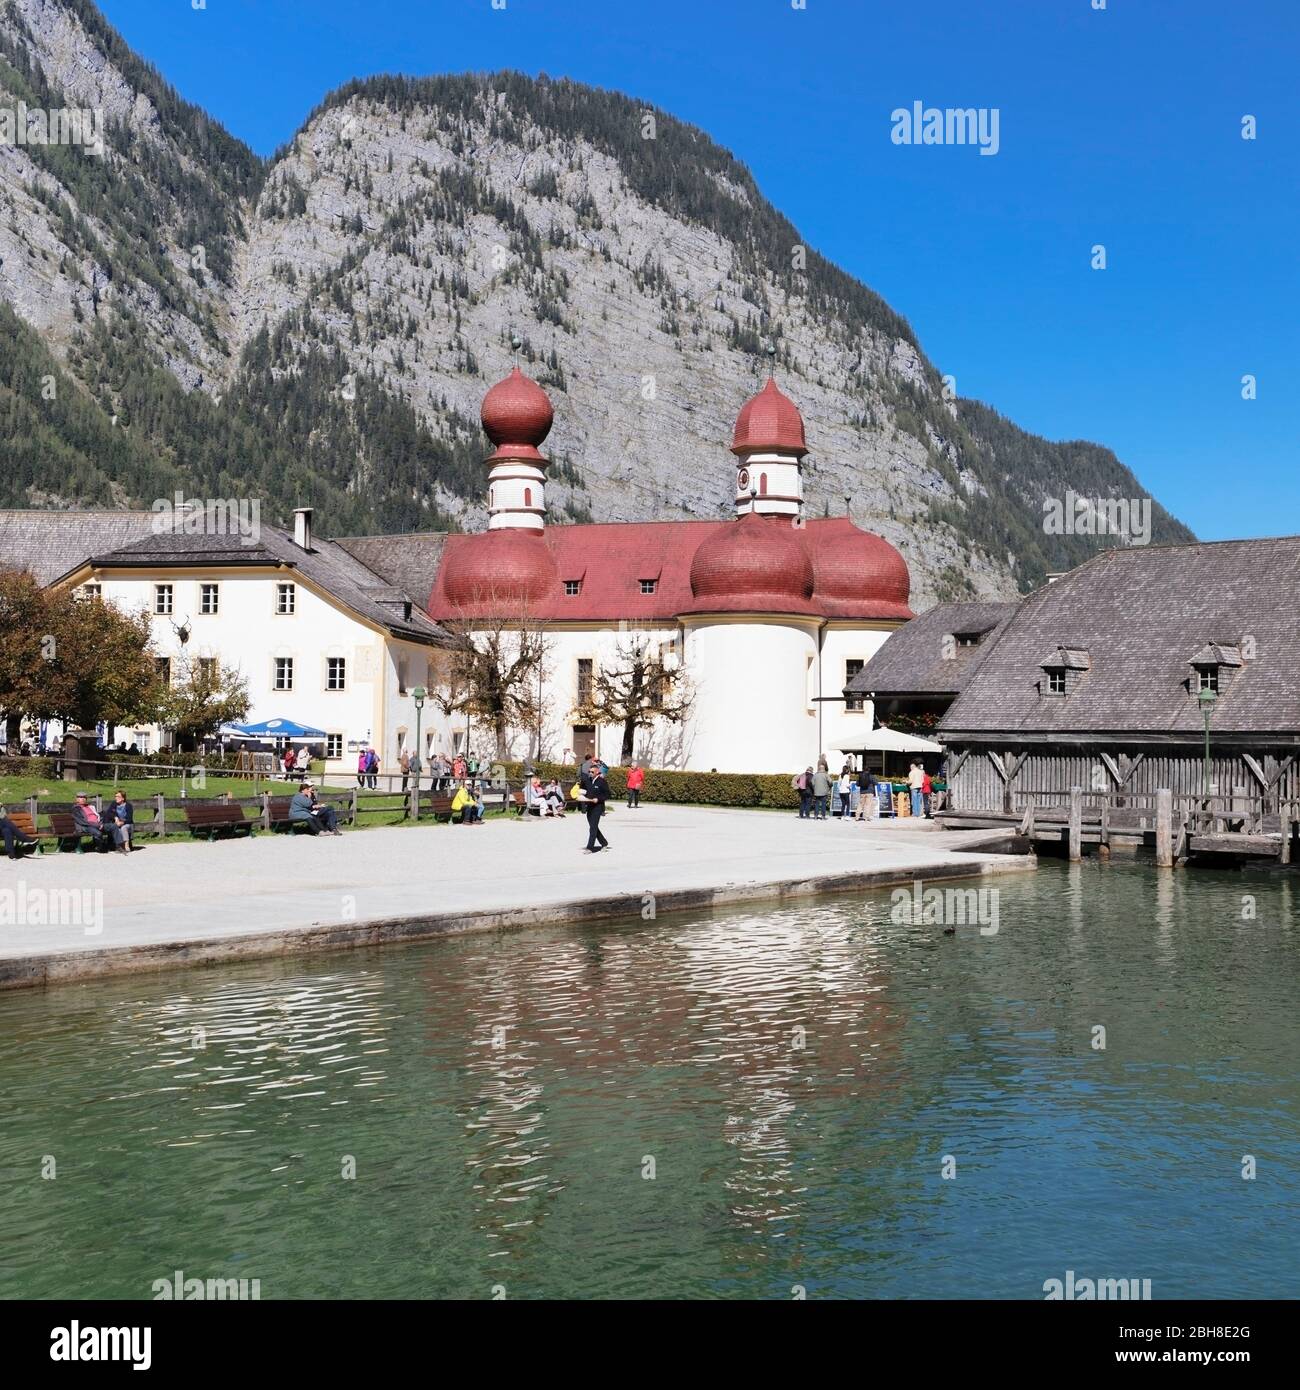 St. Bartholomä am Königssee, Berchtesgadener Land, Nationalpark Berchtesgaden, Oberbayern, Deutschland Foto Stock